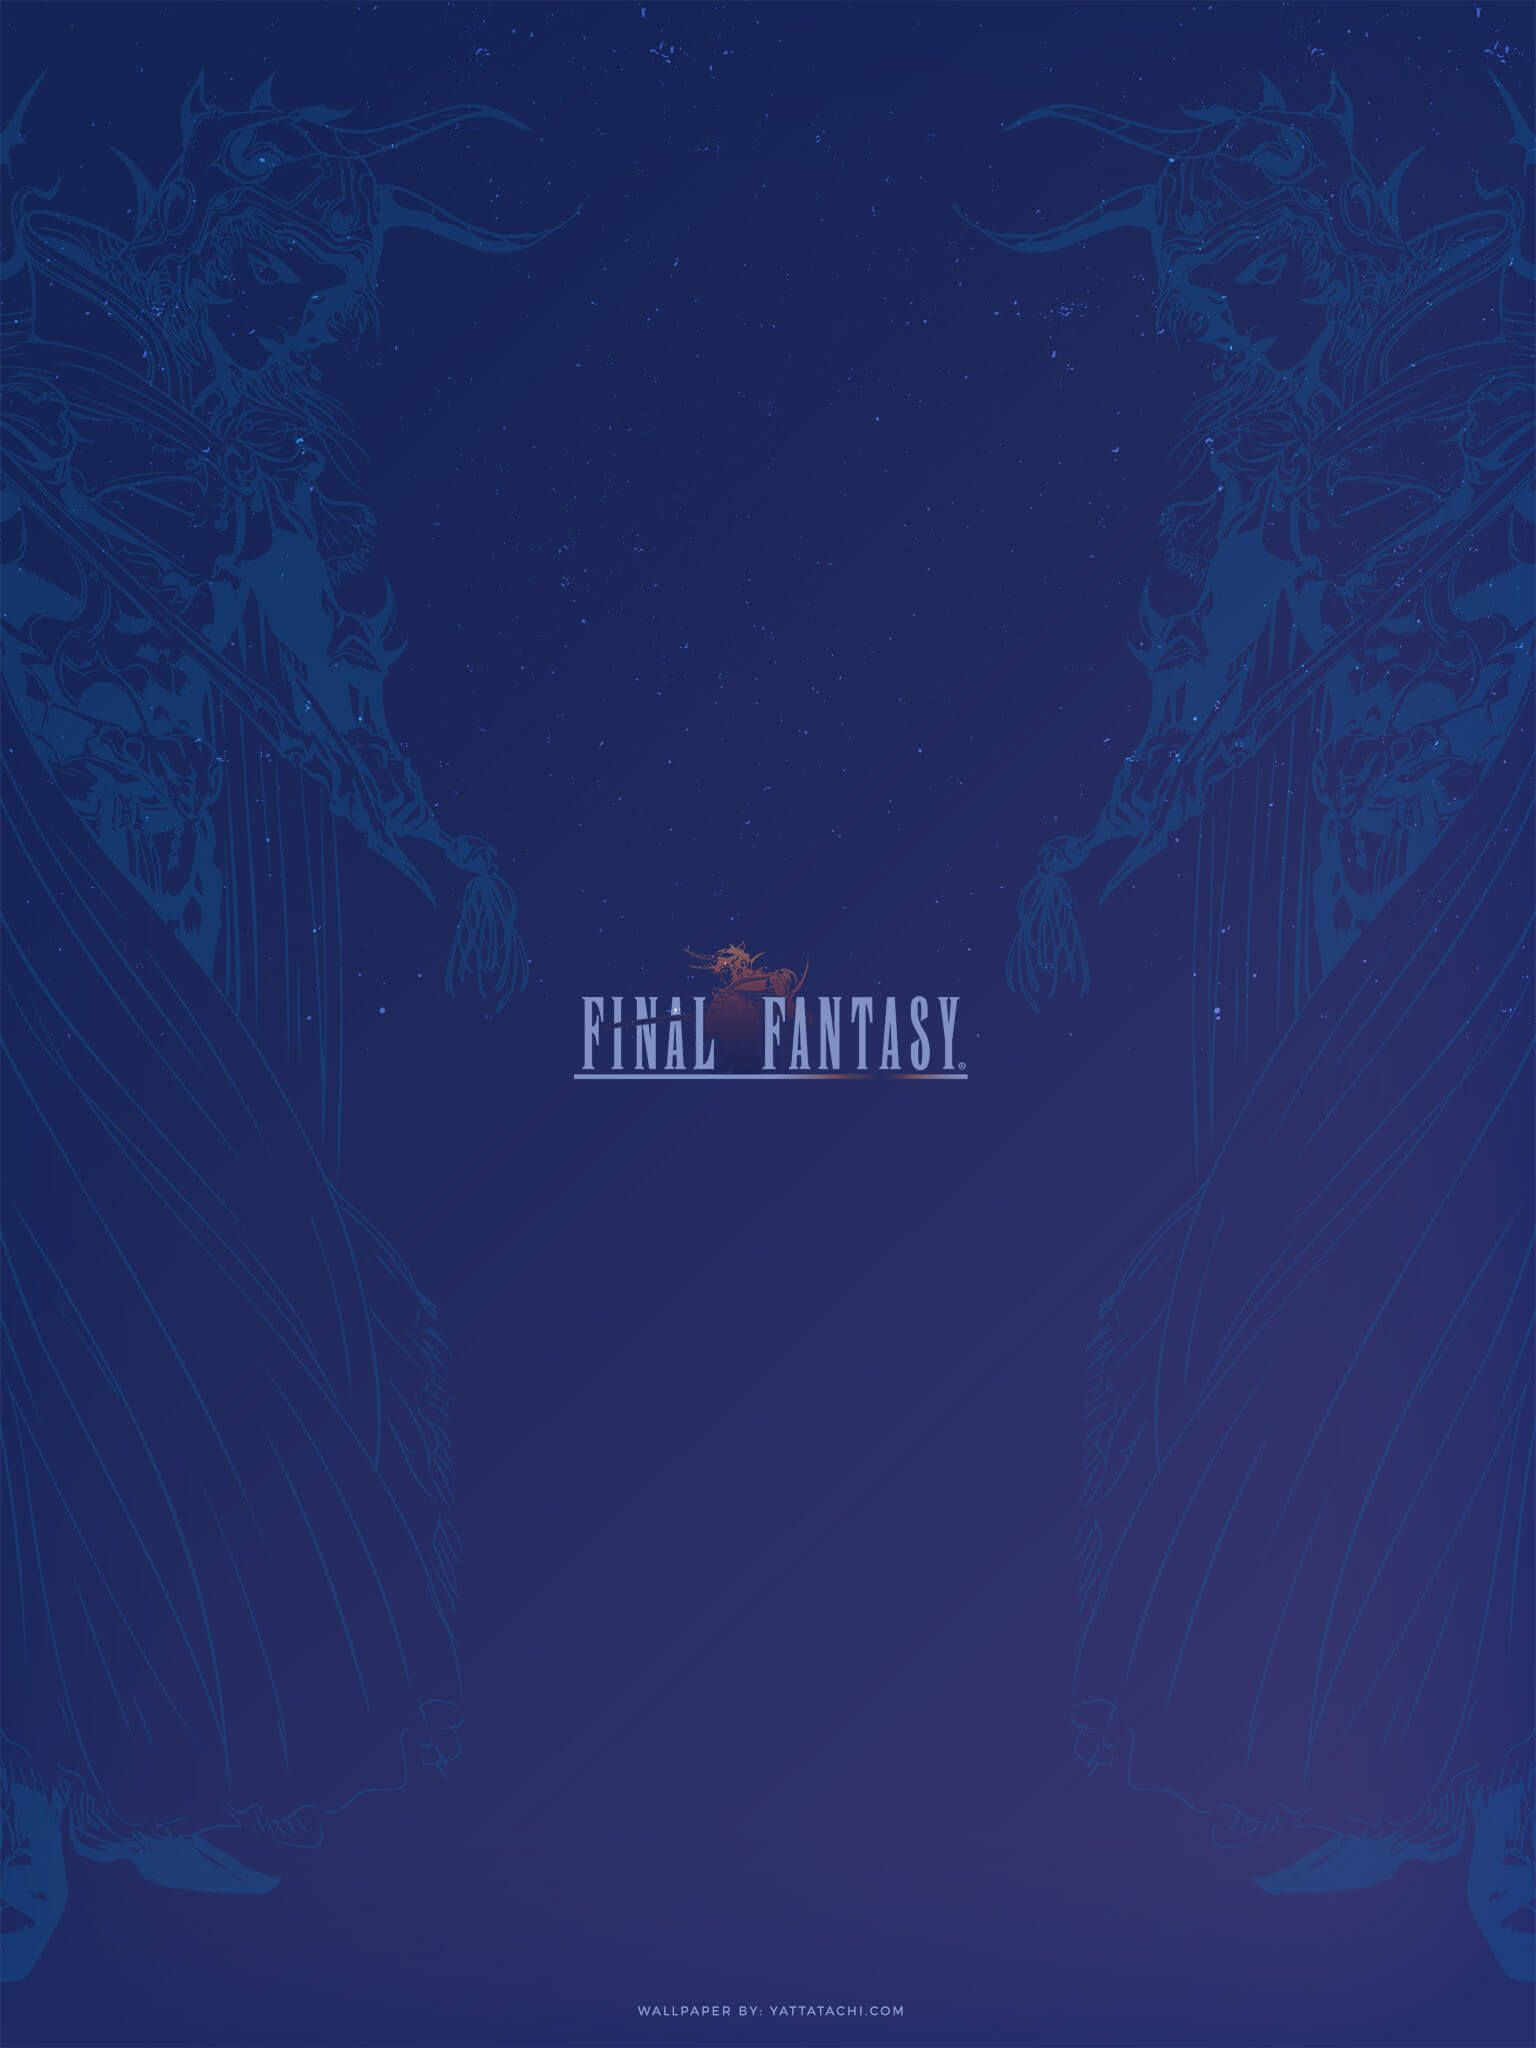 Wallpaper Of The Month: Final Fantasy 1 Yatta Tachi